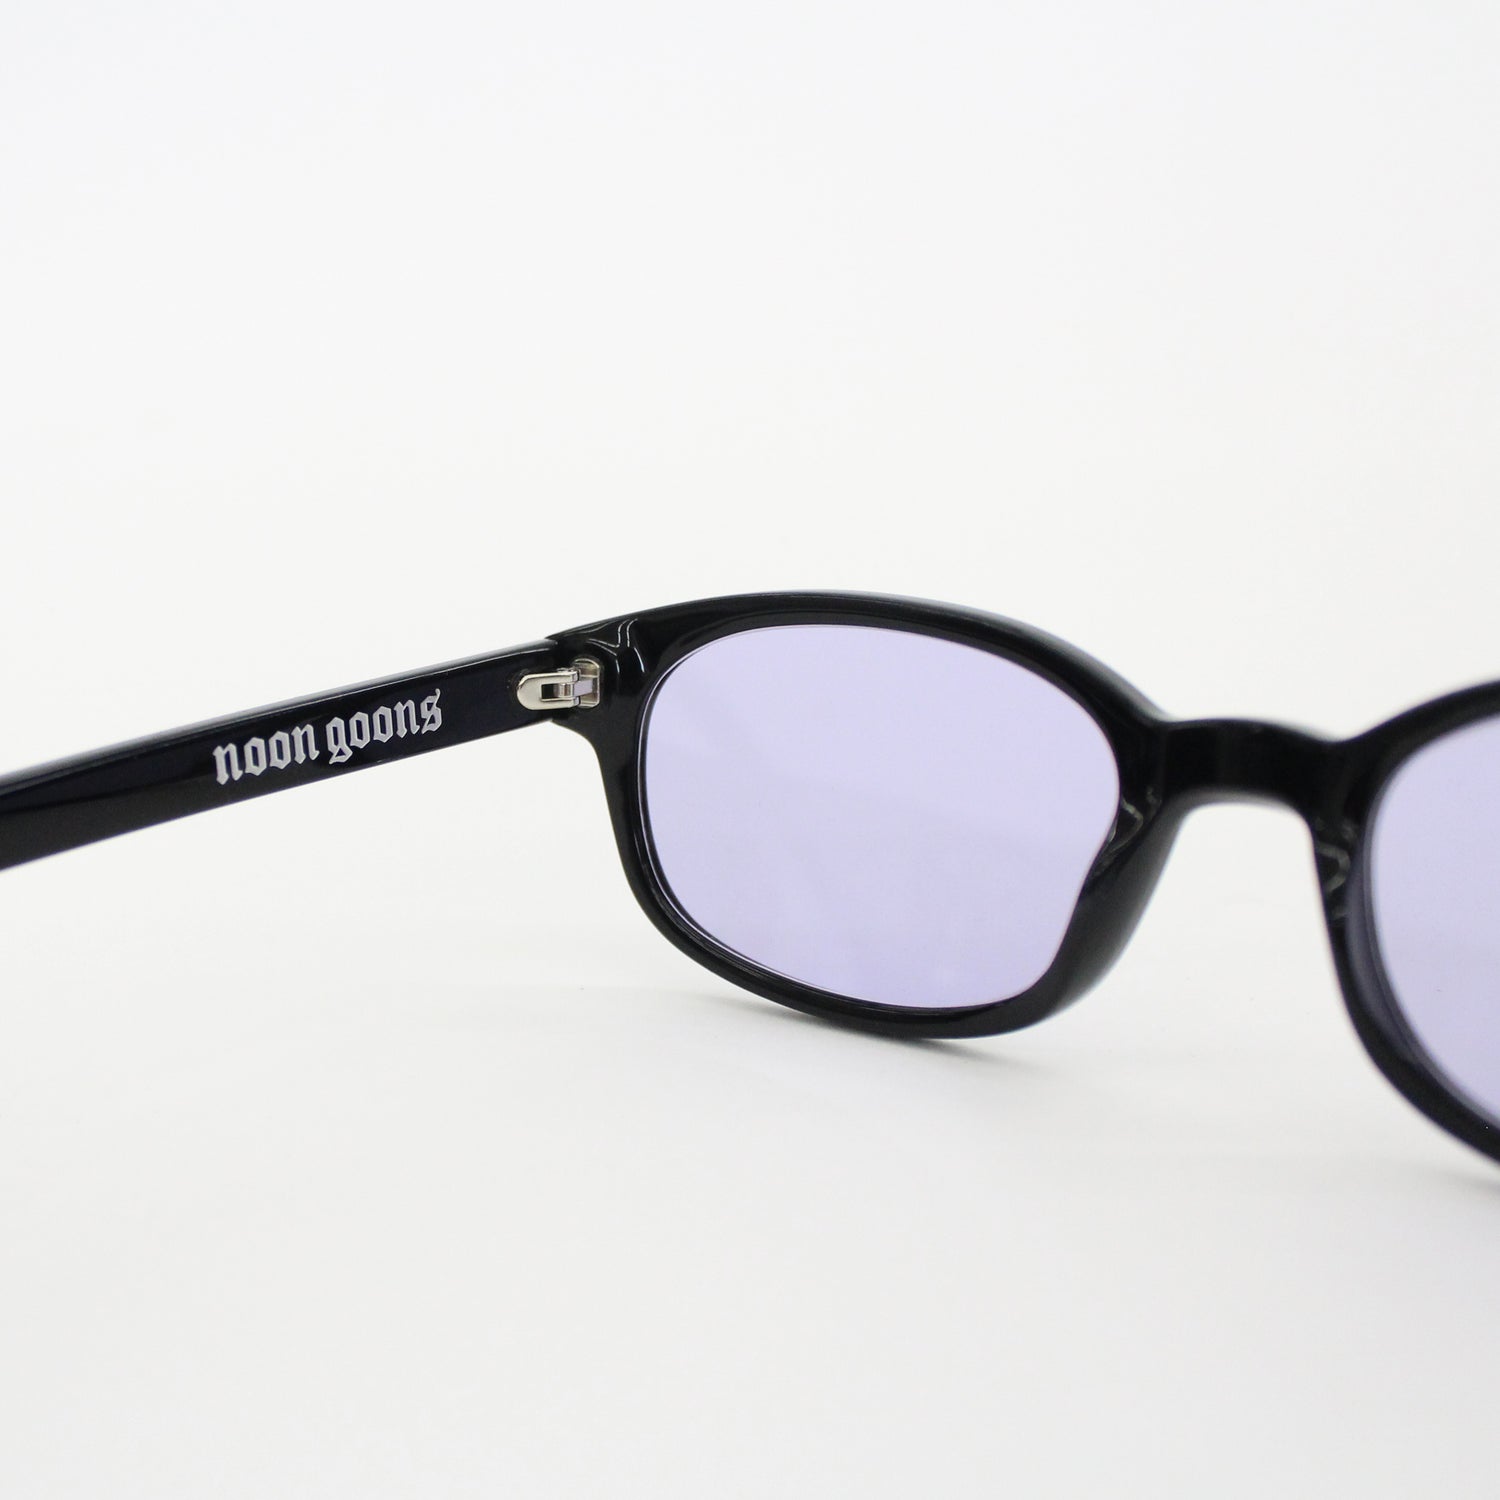 Unibase Glasses - Purple